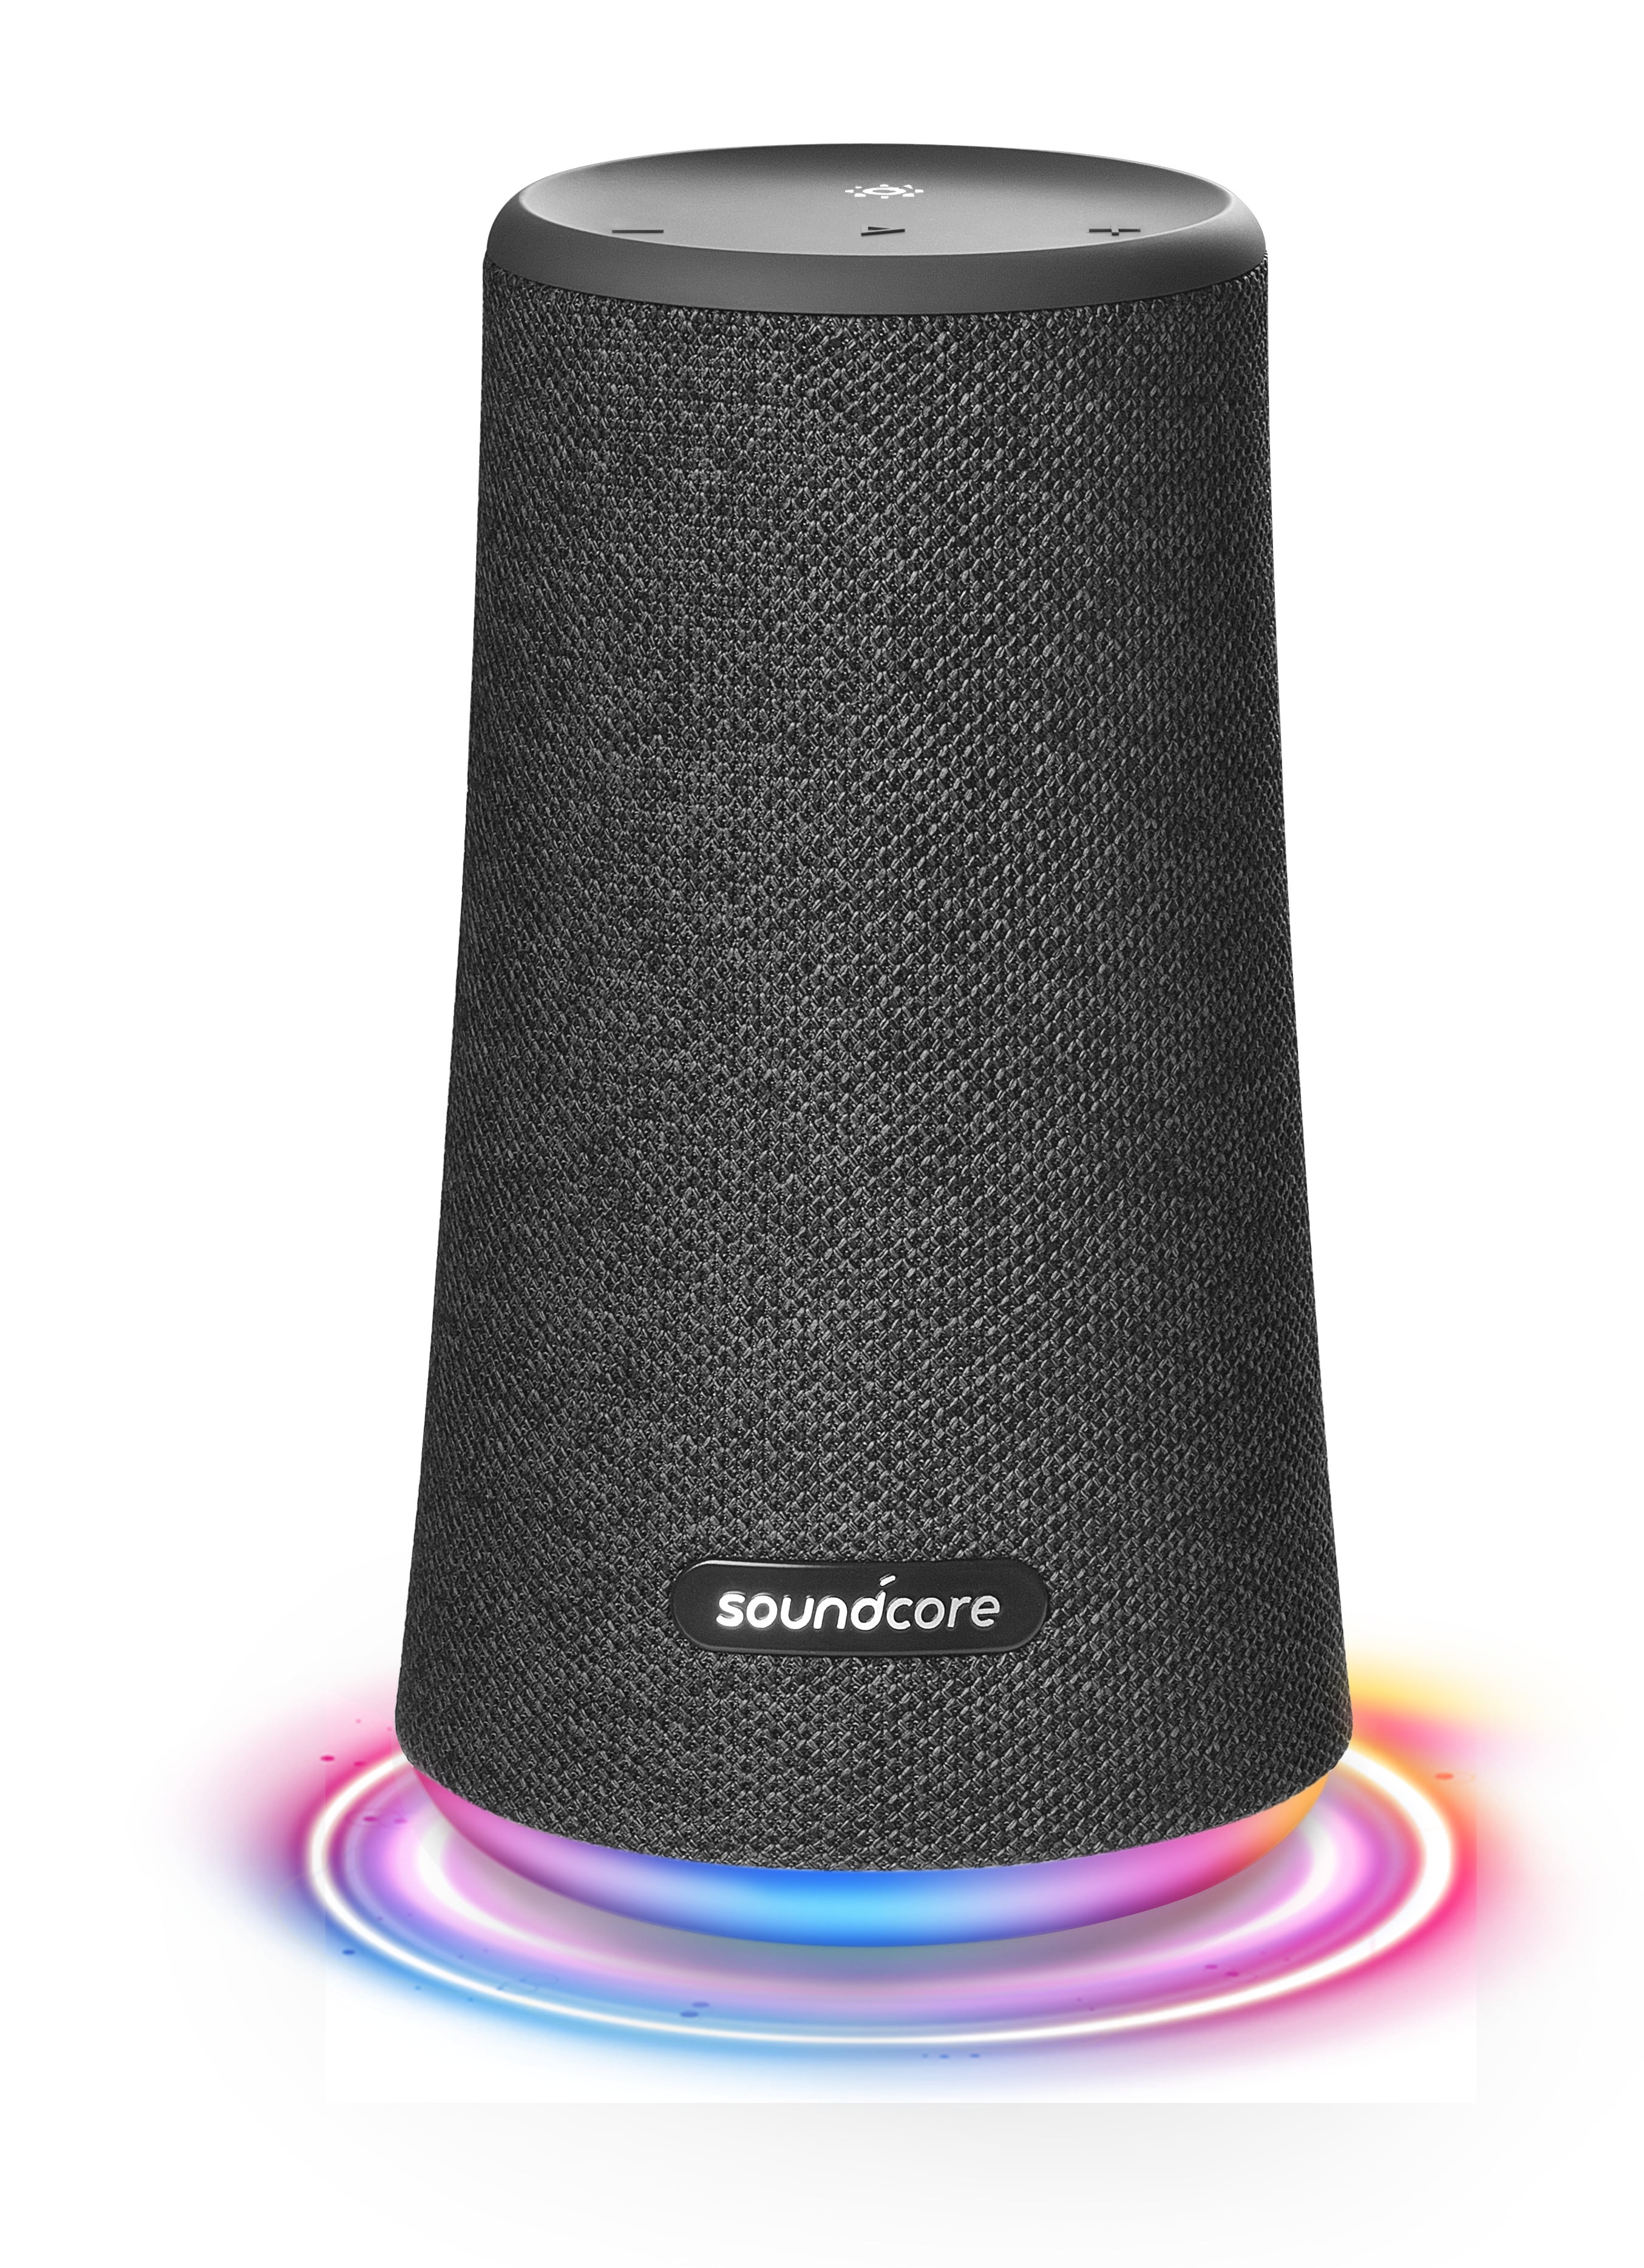 Anker Soundcore Flare + Portable Bluetooth Speaker 360°Sound LED Light,  Waterproof,20W- Blue 